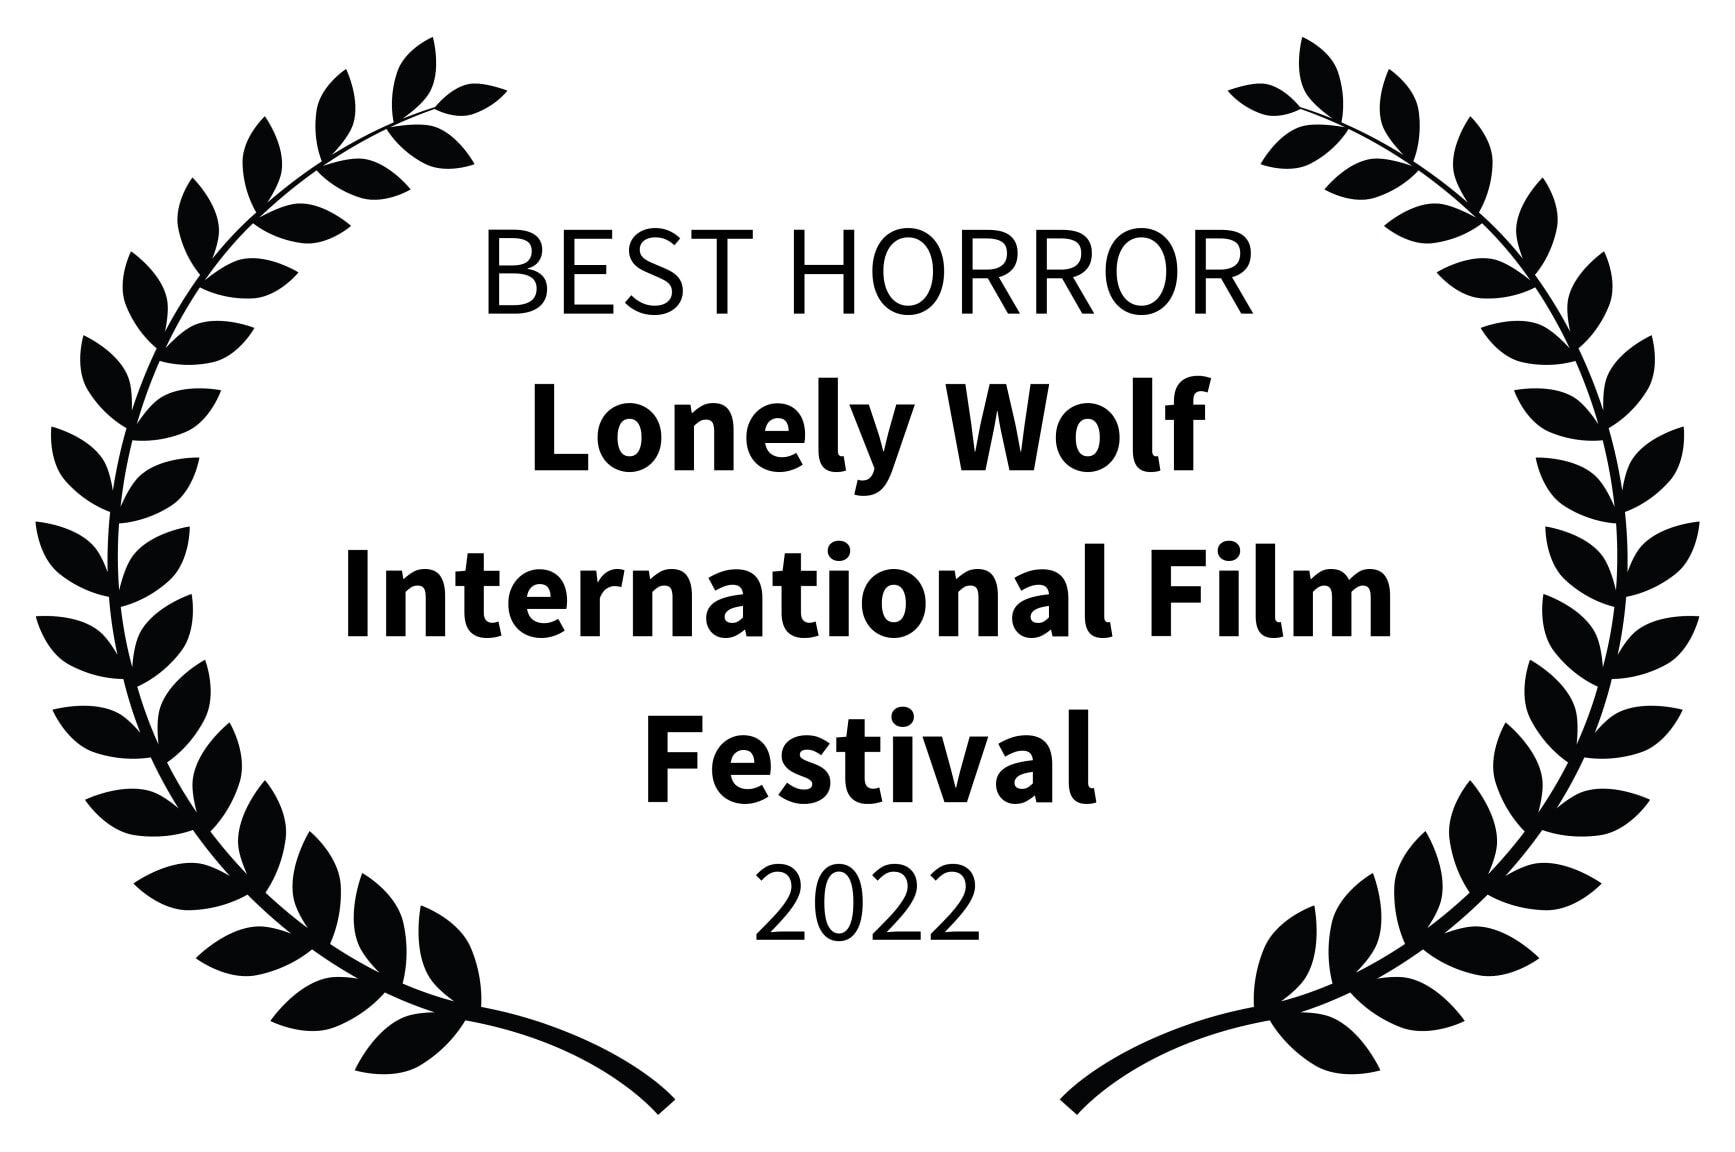 BEST HORROR - Lonely Wolf International Film Festival - 2022